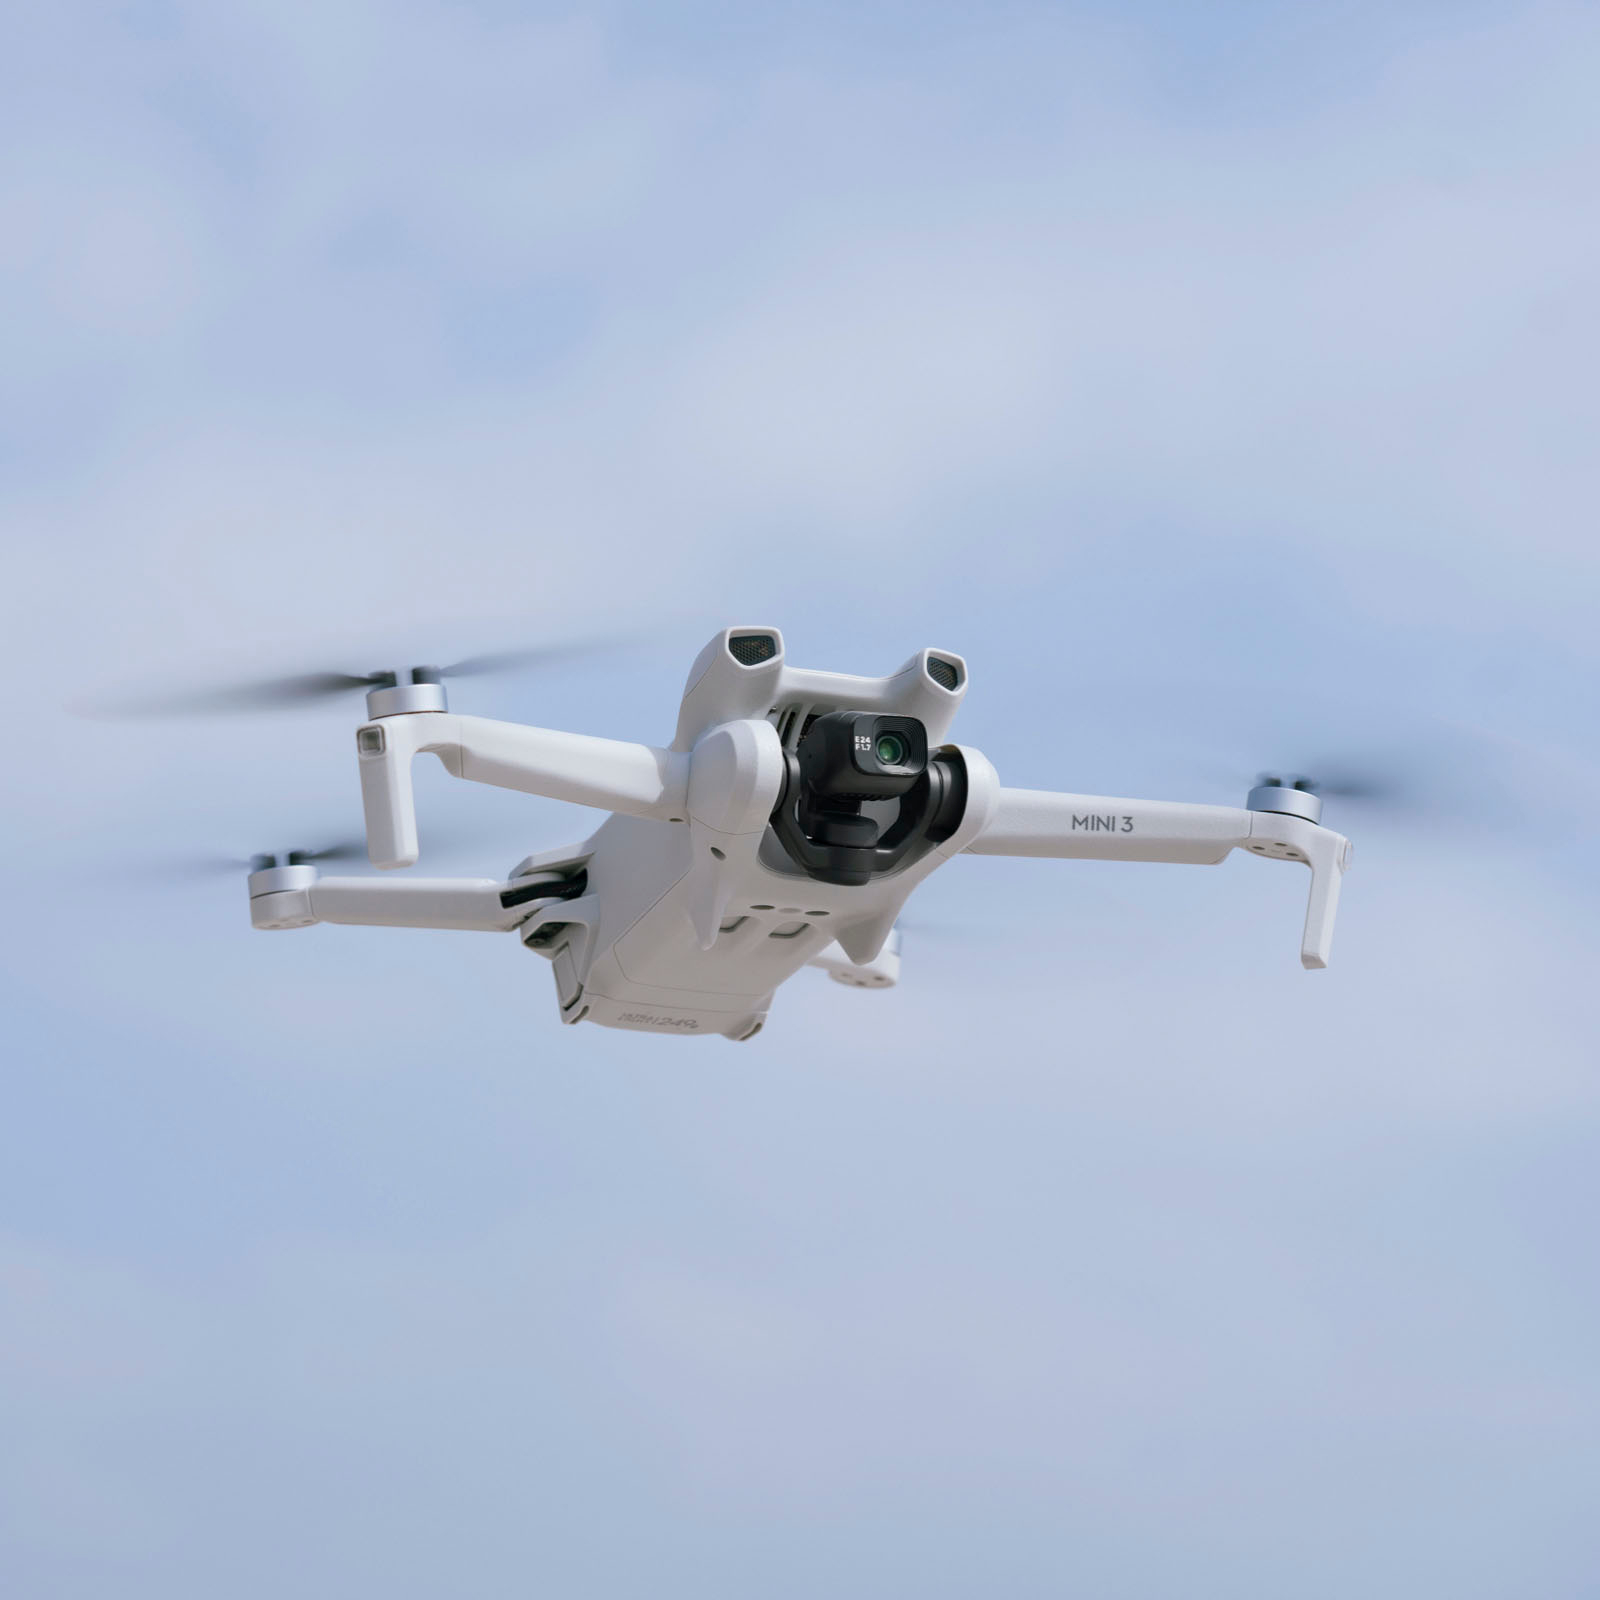 Drone Dji Mini 3 Fly More Combo avec radiocommande smart controller Gris -  Drone photo vidéo - Achat & prix